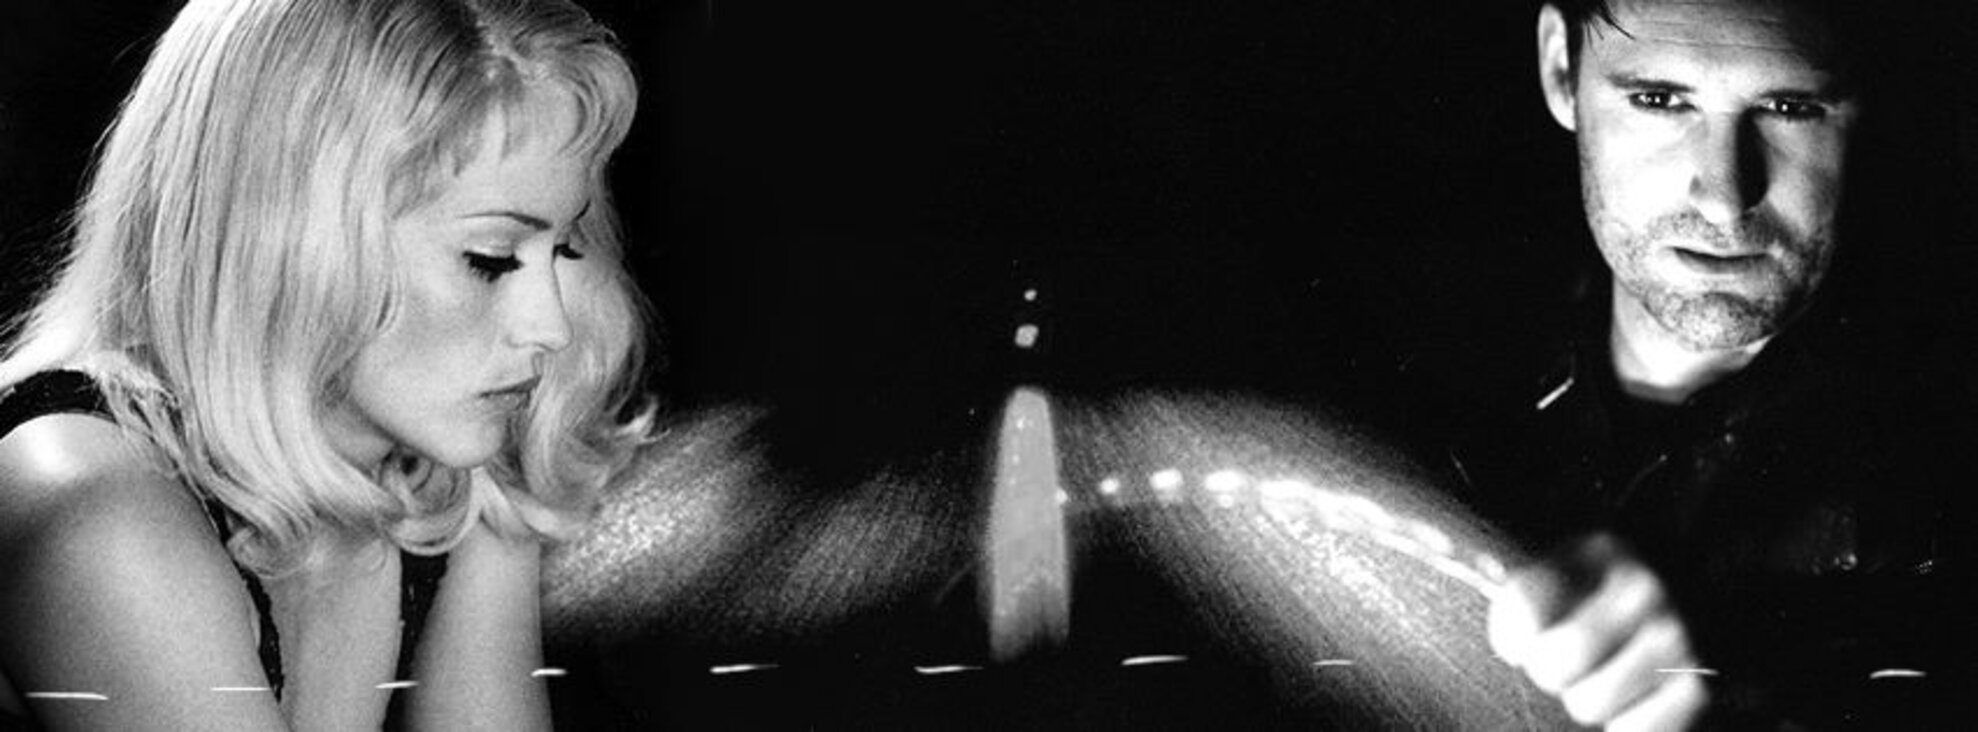 Никуда объяснение. Дэвид Линч шоссе в никуда. Шоссе в никуда (Lost Highway) 1997. Шоссе в никуда Дэвида Линча.